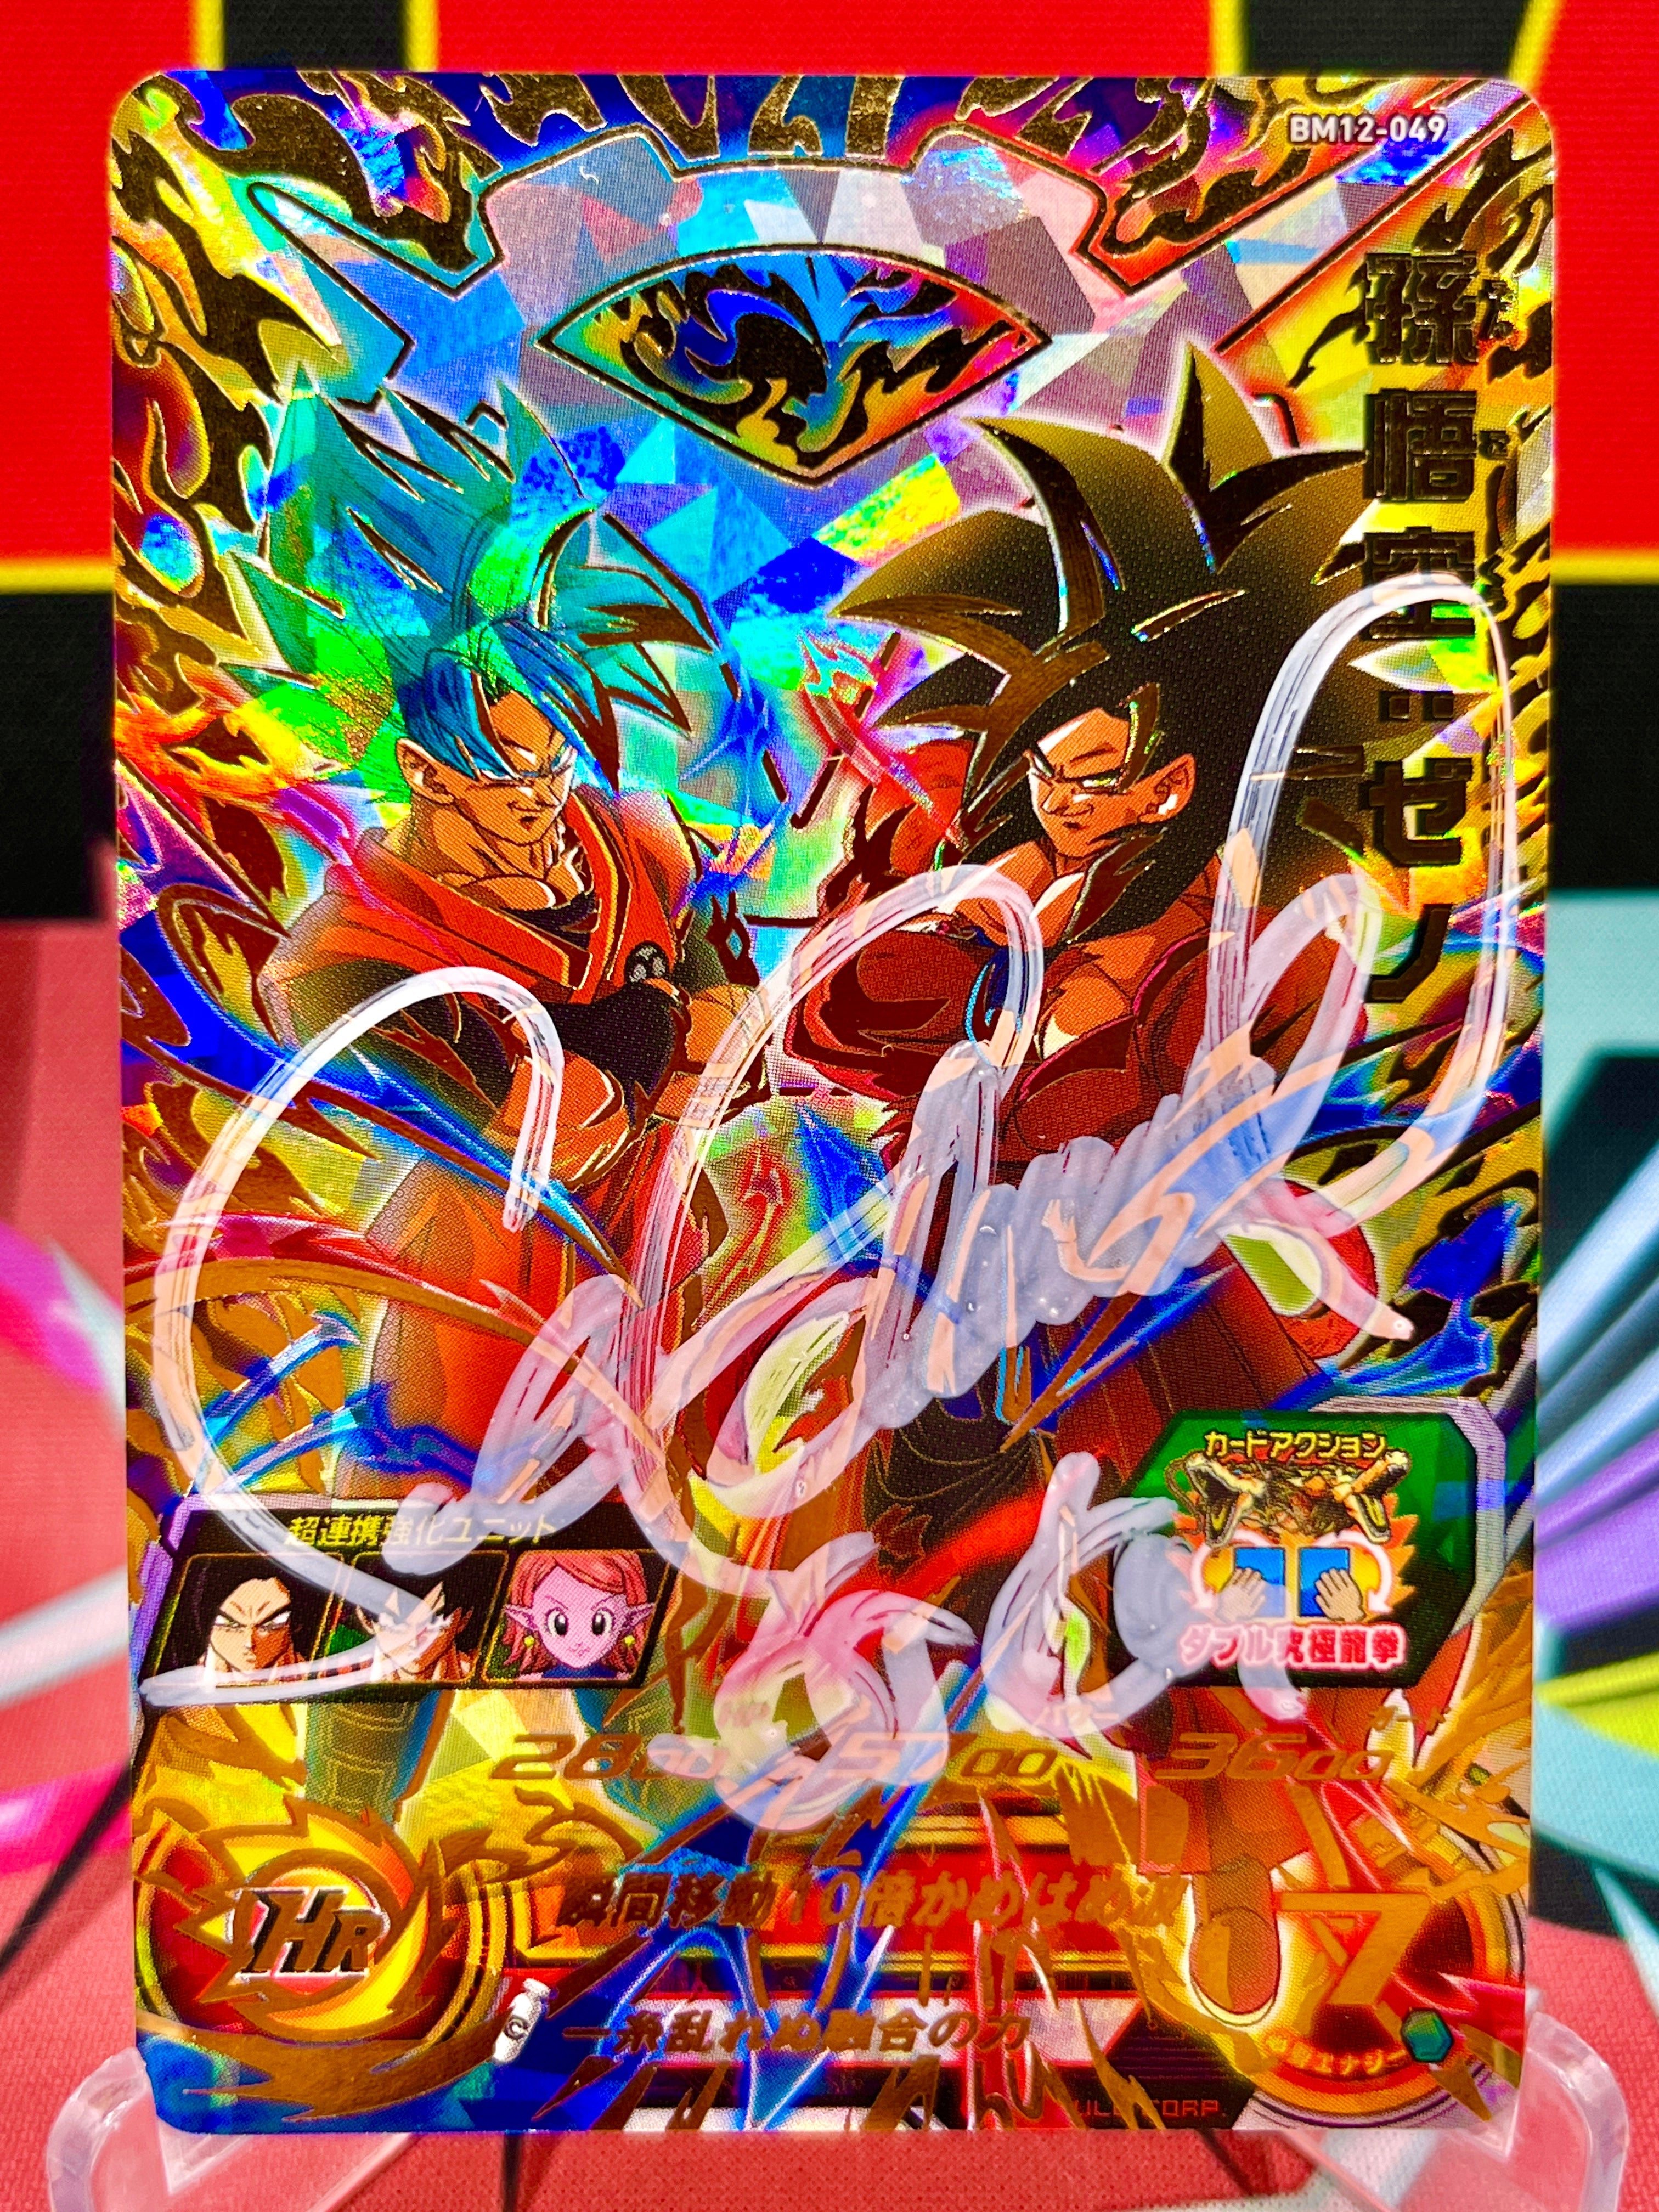 BM12-049 Son Goku Ultimate (2022) Autographed by Sean Schemmel